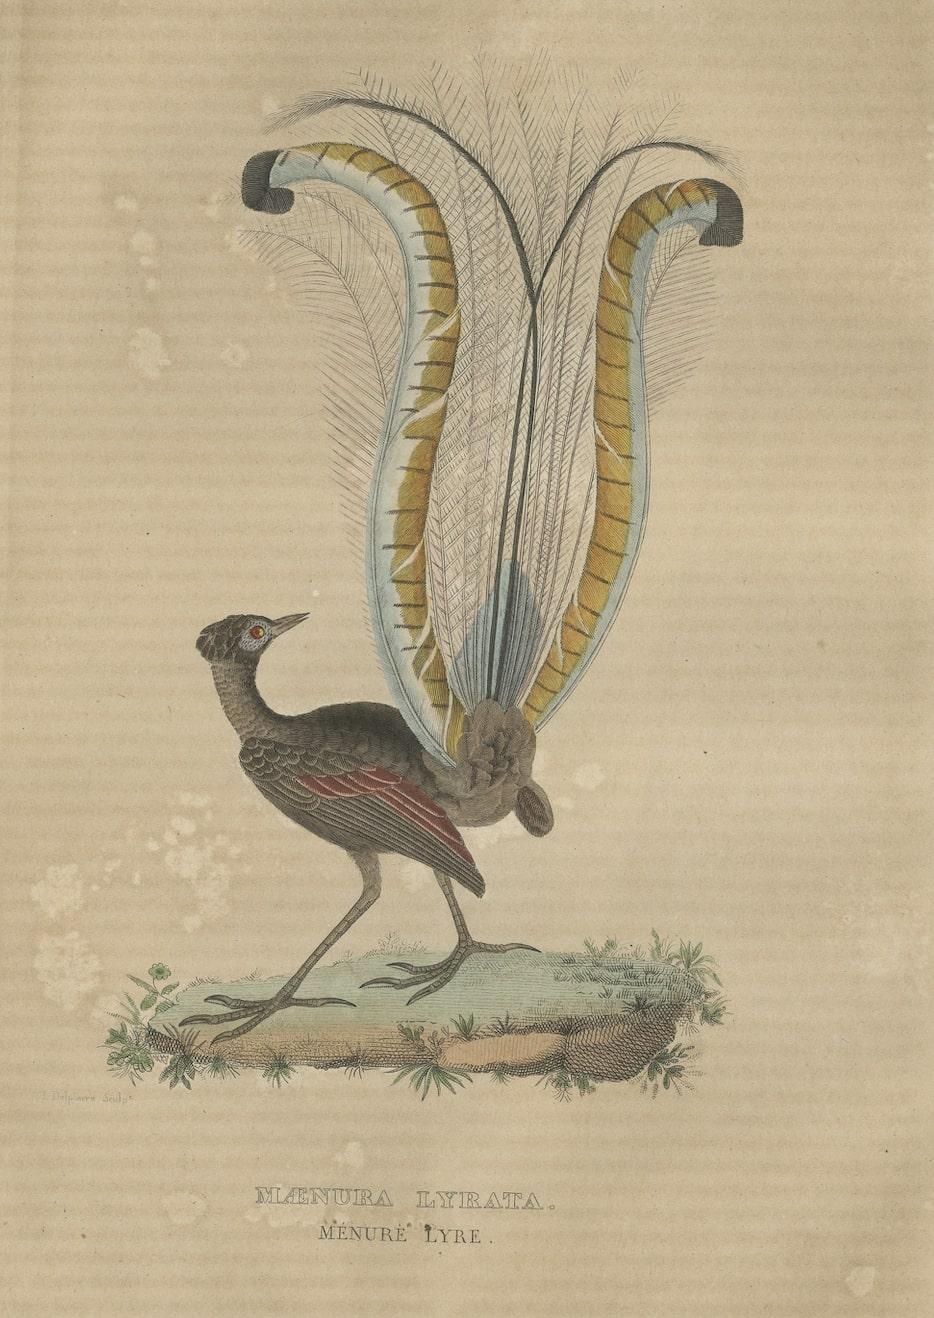 Paper Original Hand-Colored Bird Print of the Superb Lyrebird of Australia (male) For Sale